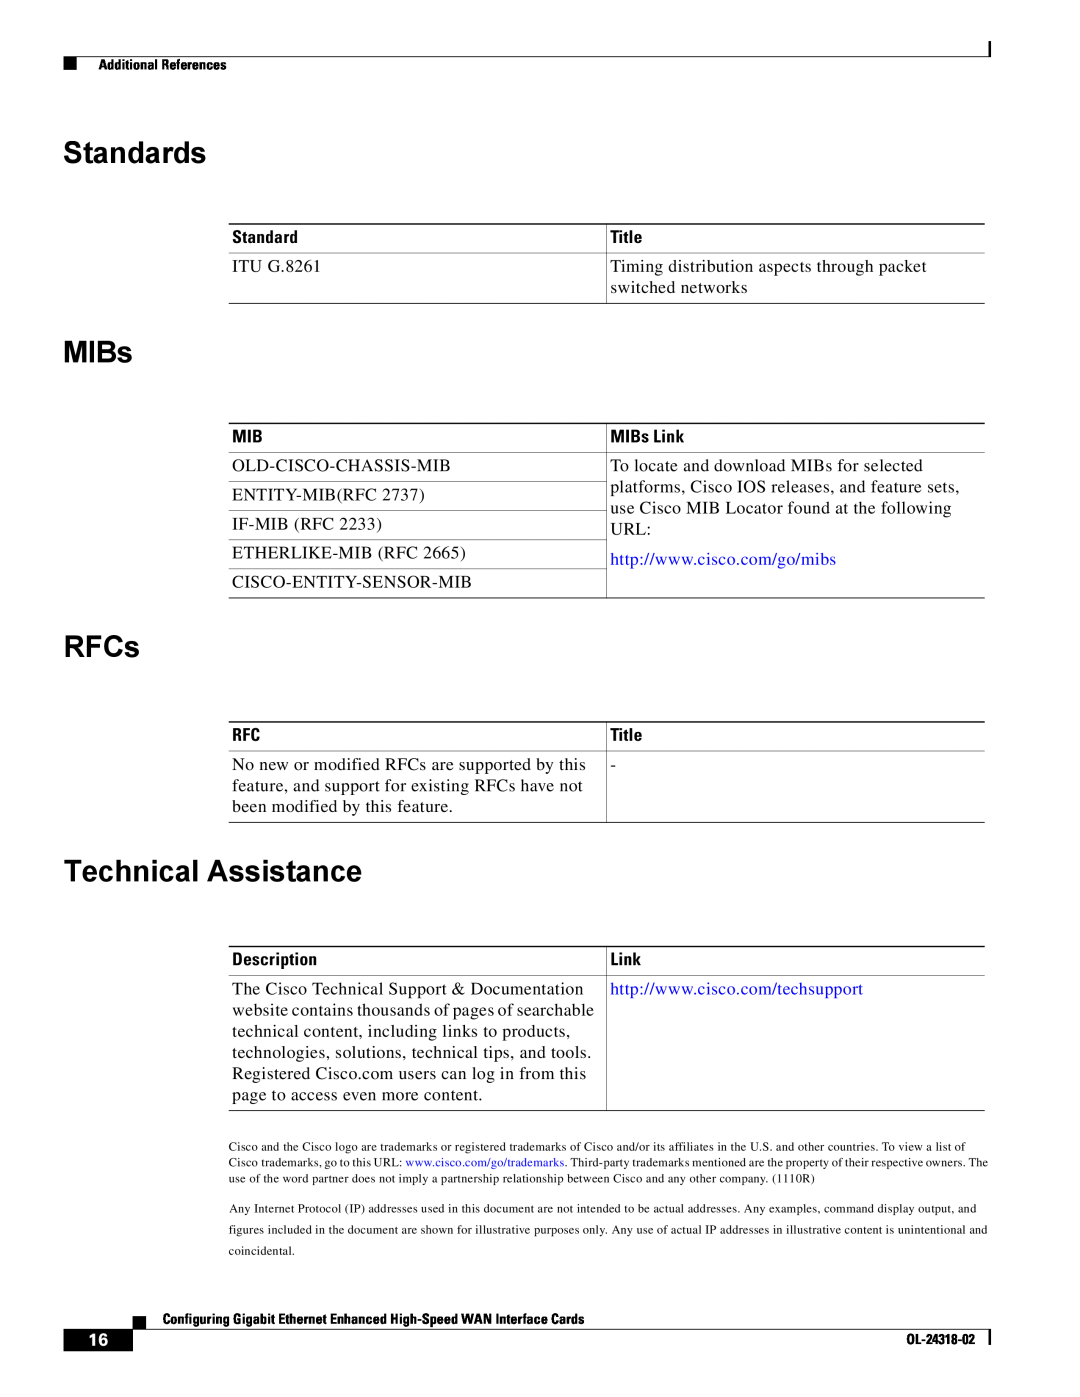 Cisco Systems EHWIC1GESFPCU manual Standards, RFCs, Technical Assistance, Title, MIBs Link, Description 